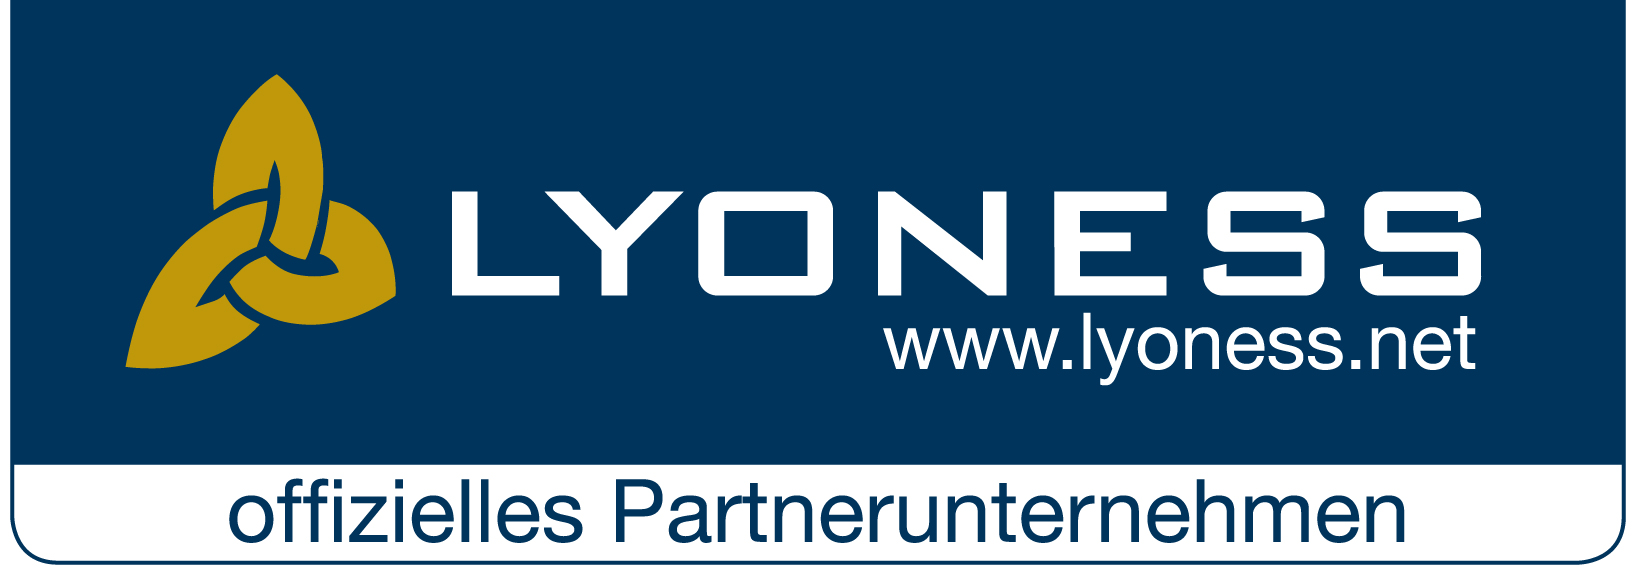 Lyoness-Partnerunternehmens-Logo